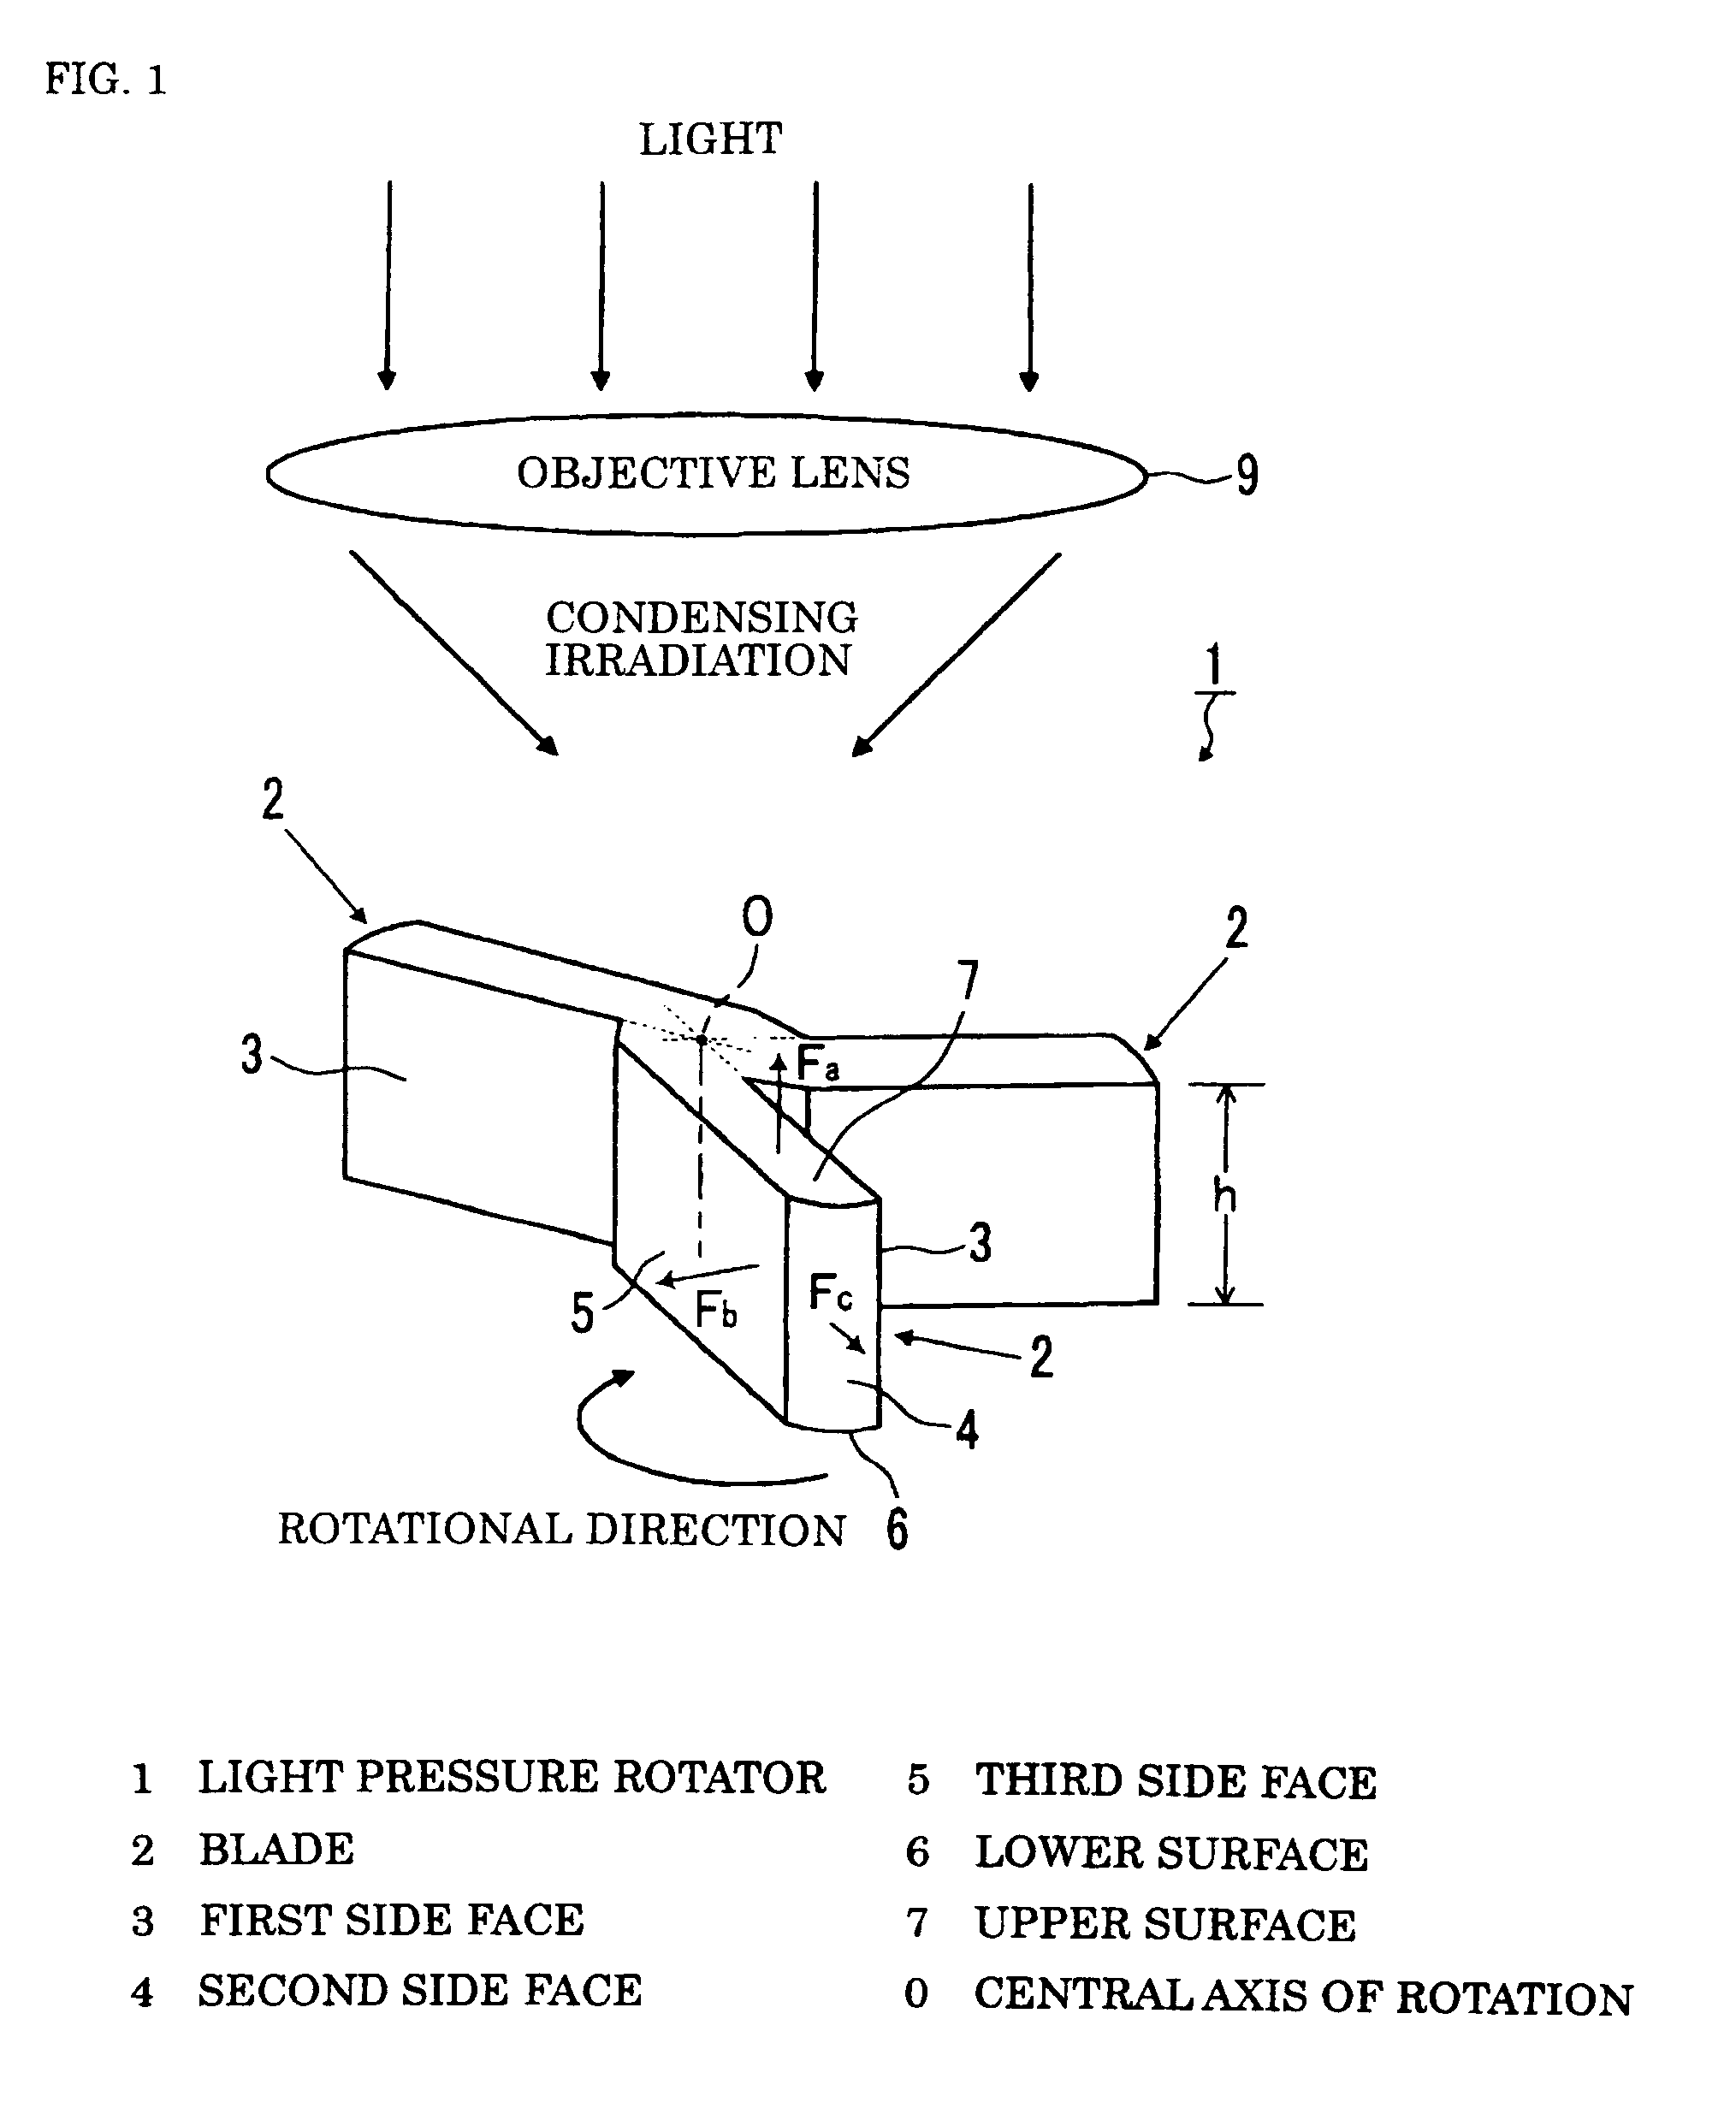 Light pressure rotator and light pressure rotating device